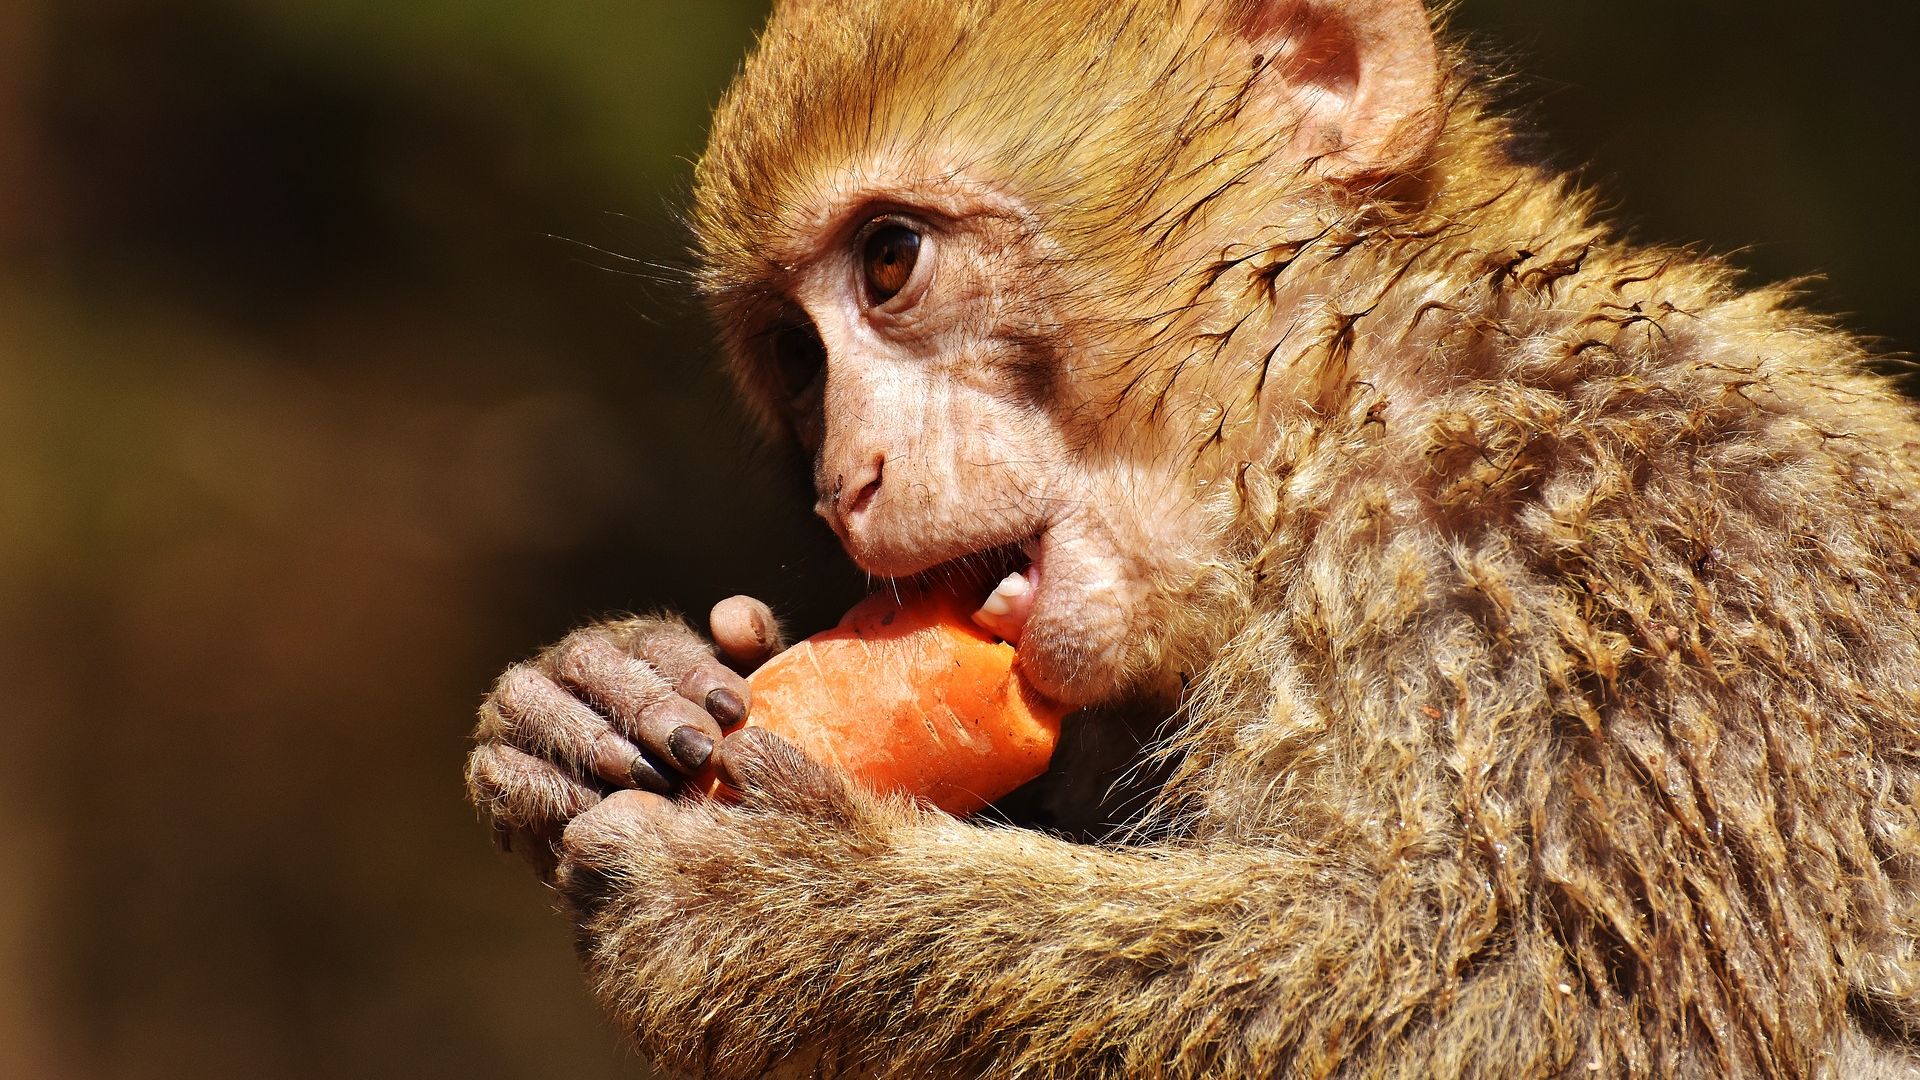 Wallpaper Barbary ape, monkey, eating